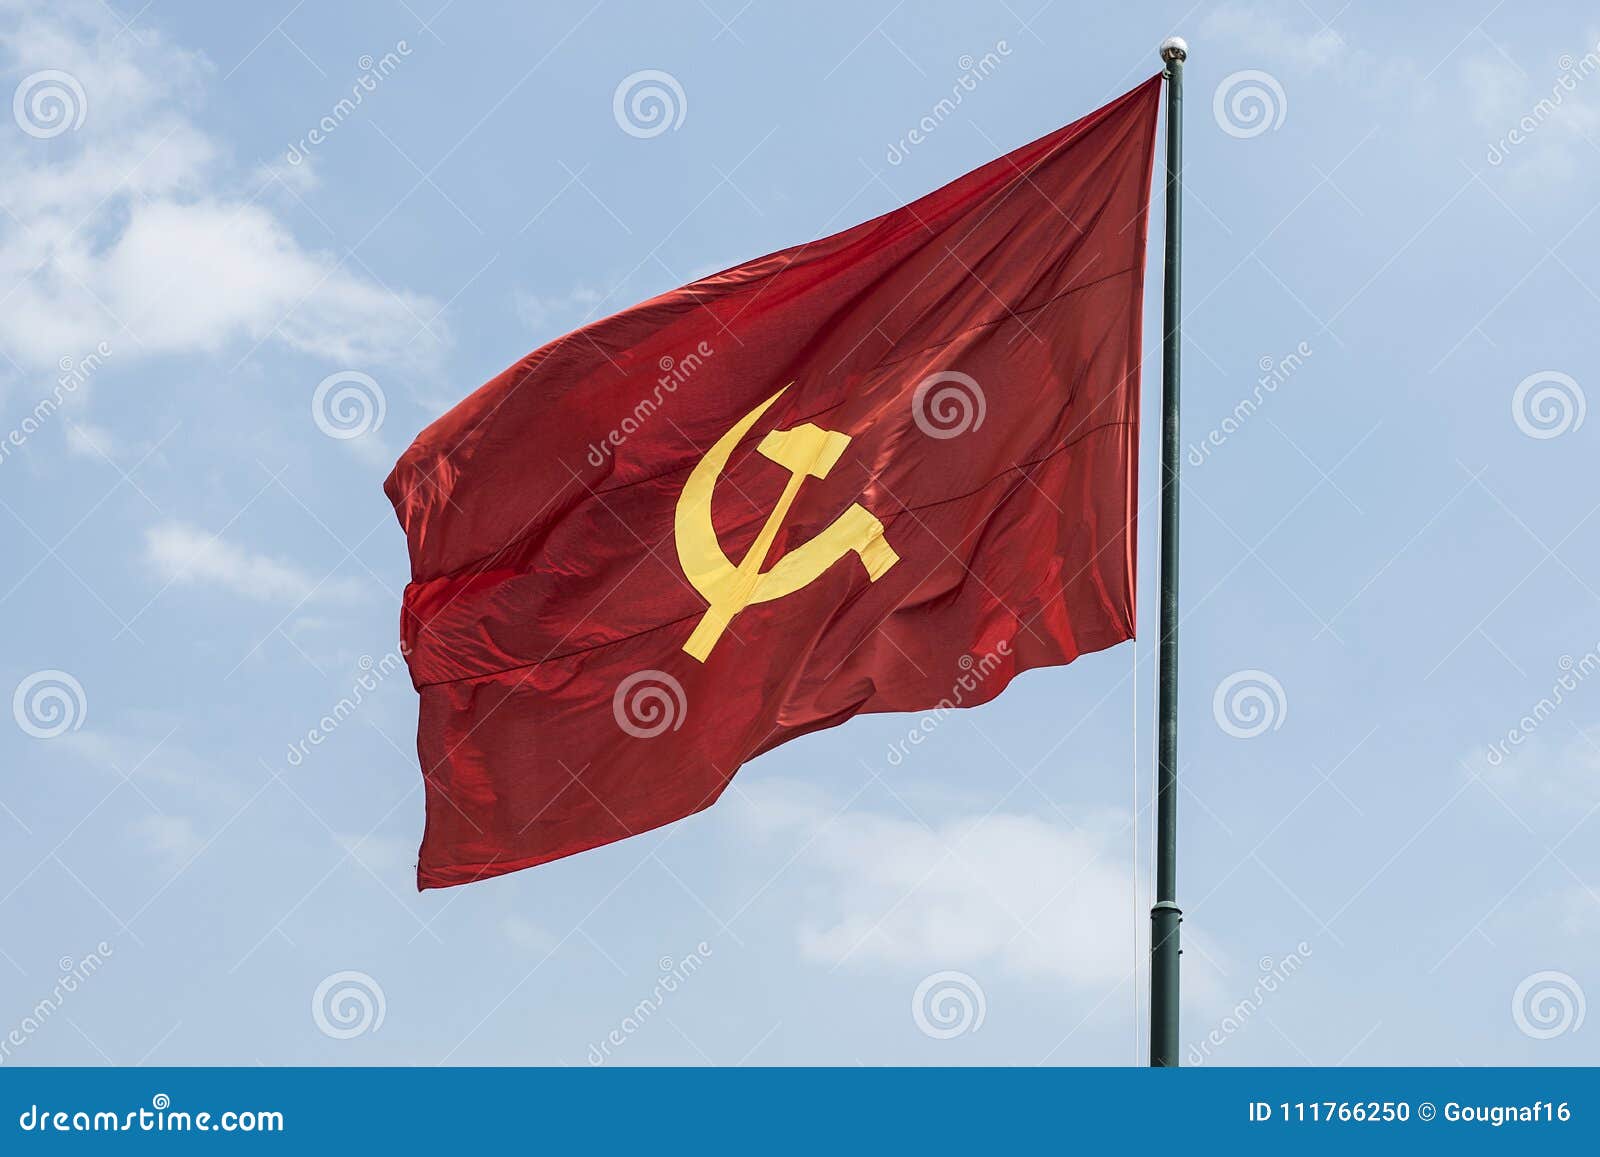 large communist flag floating in the wind